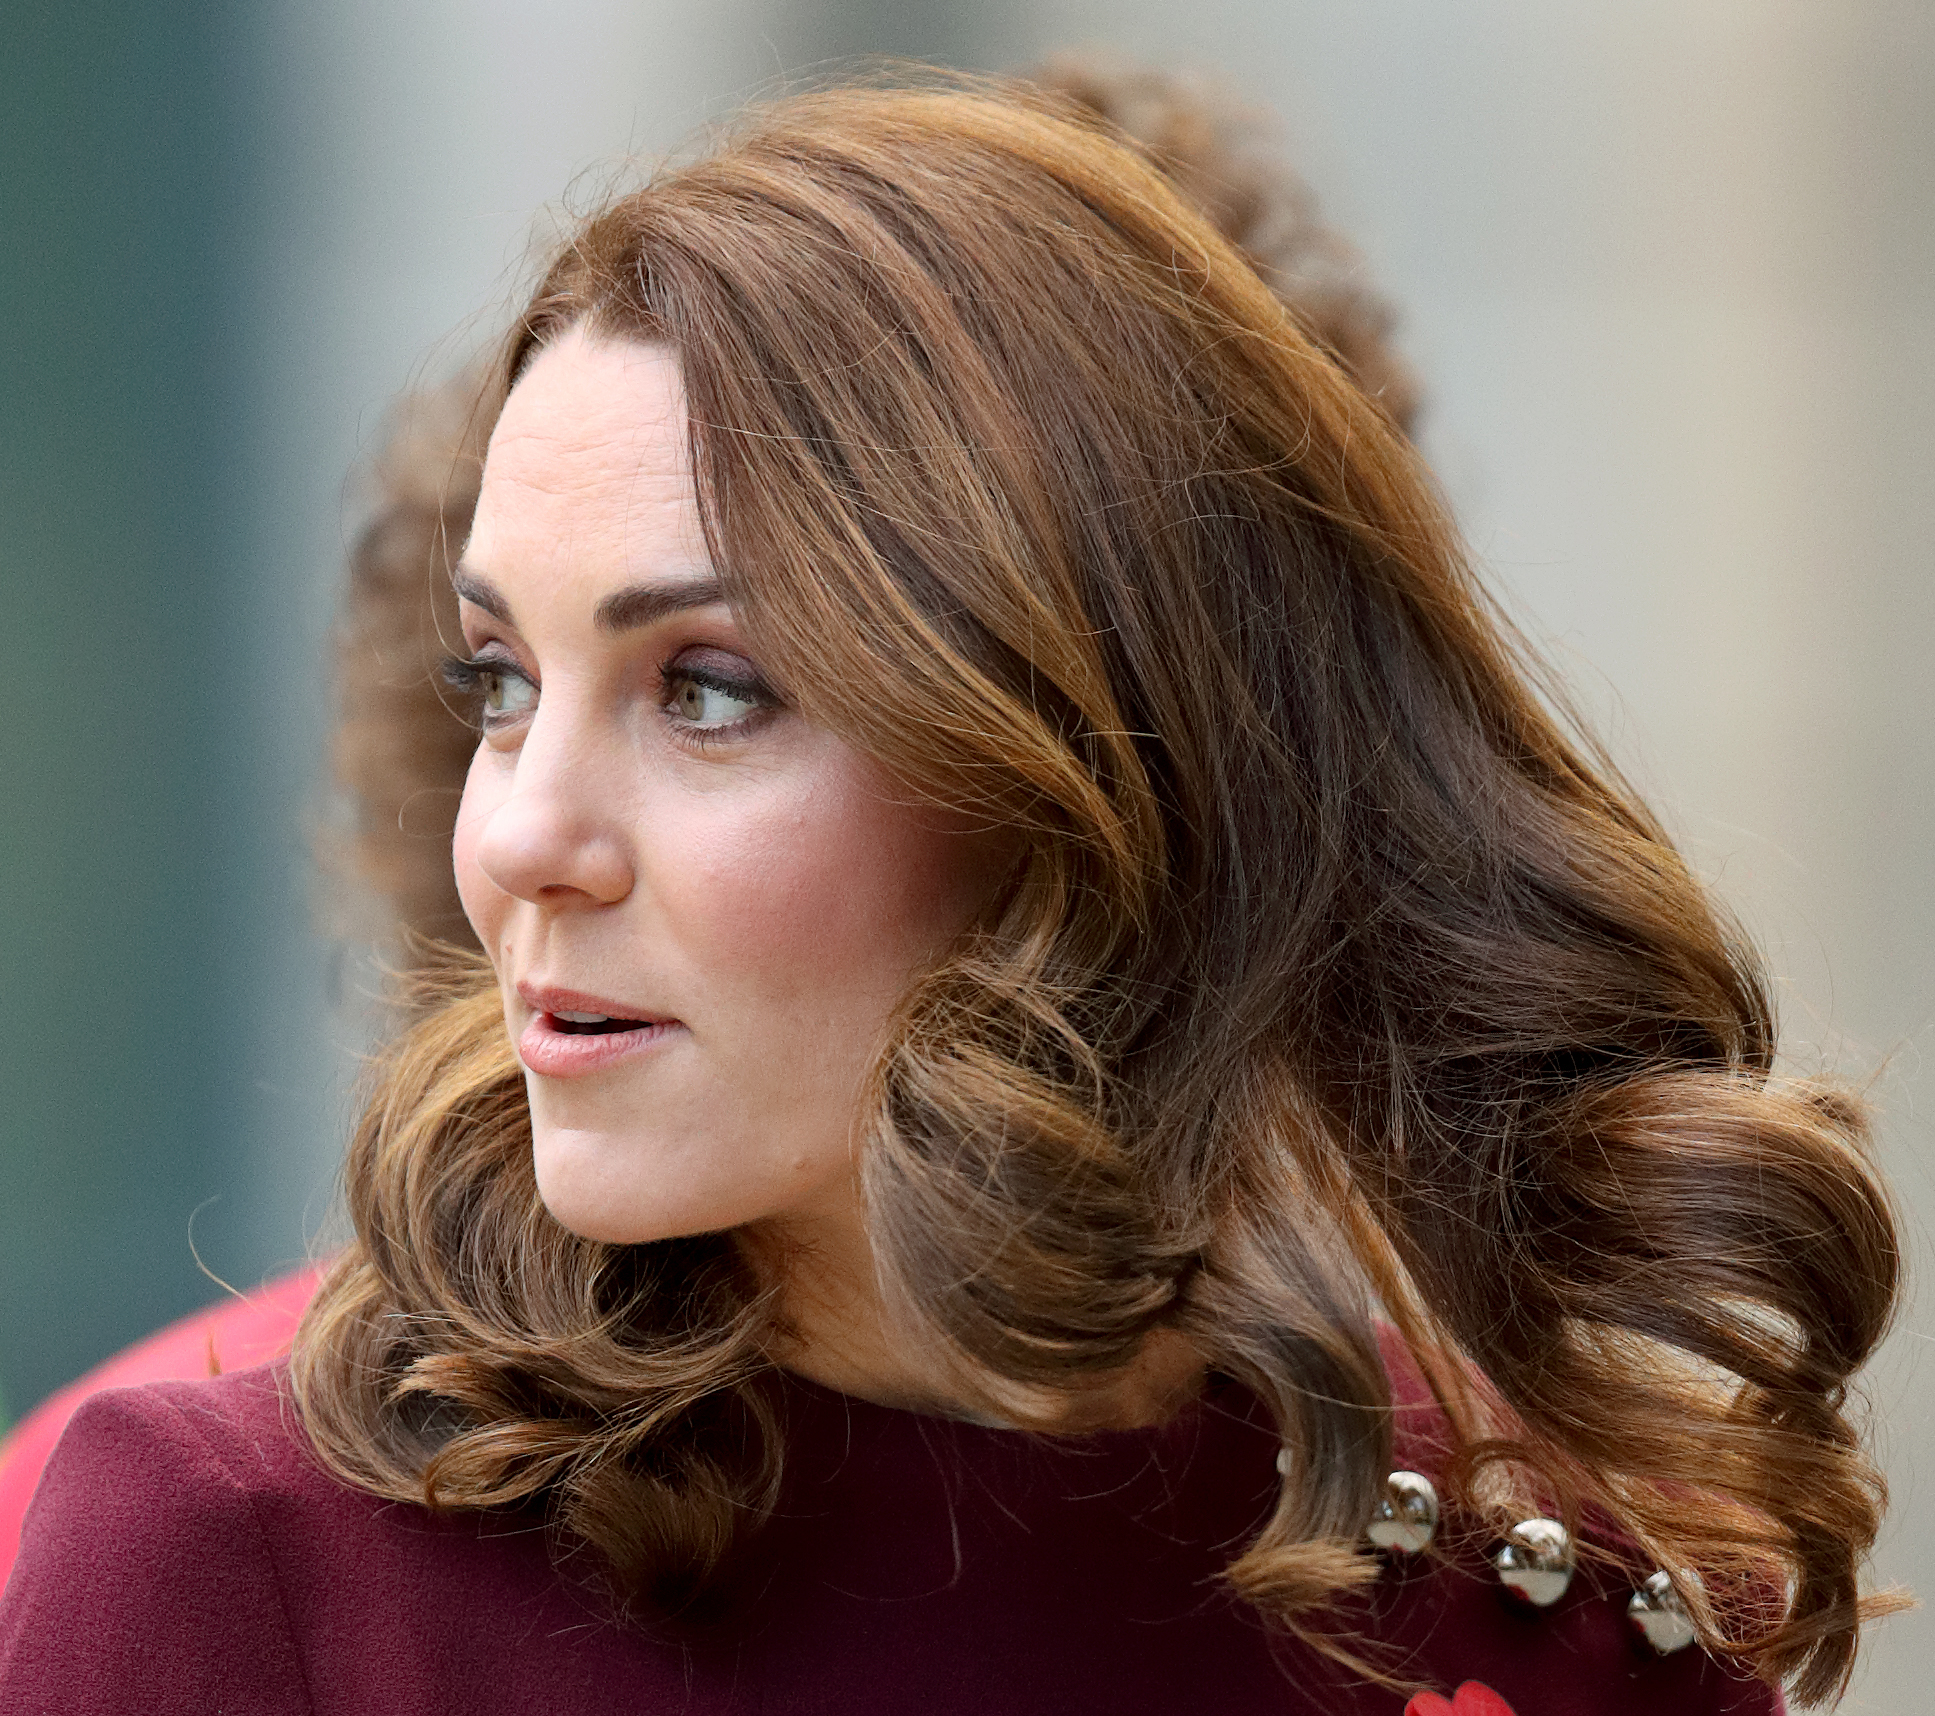 La princesa de Gales, Kate Middleton en Londres en 2017 | Fuente: Getty Images